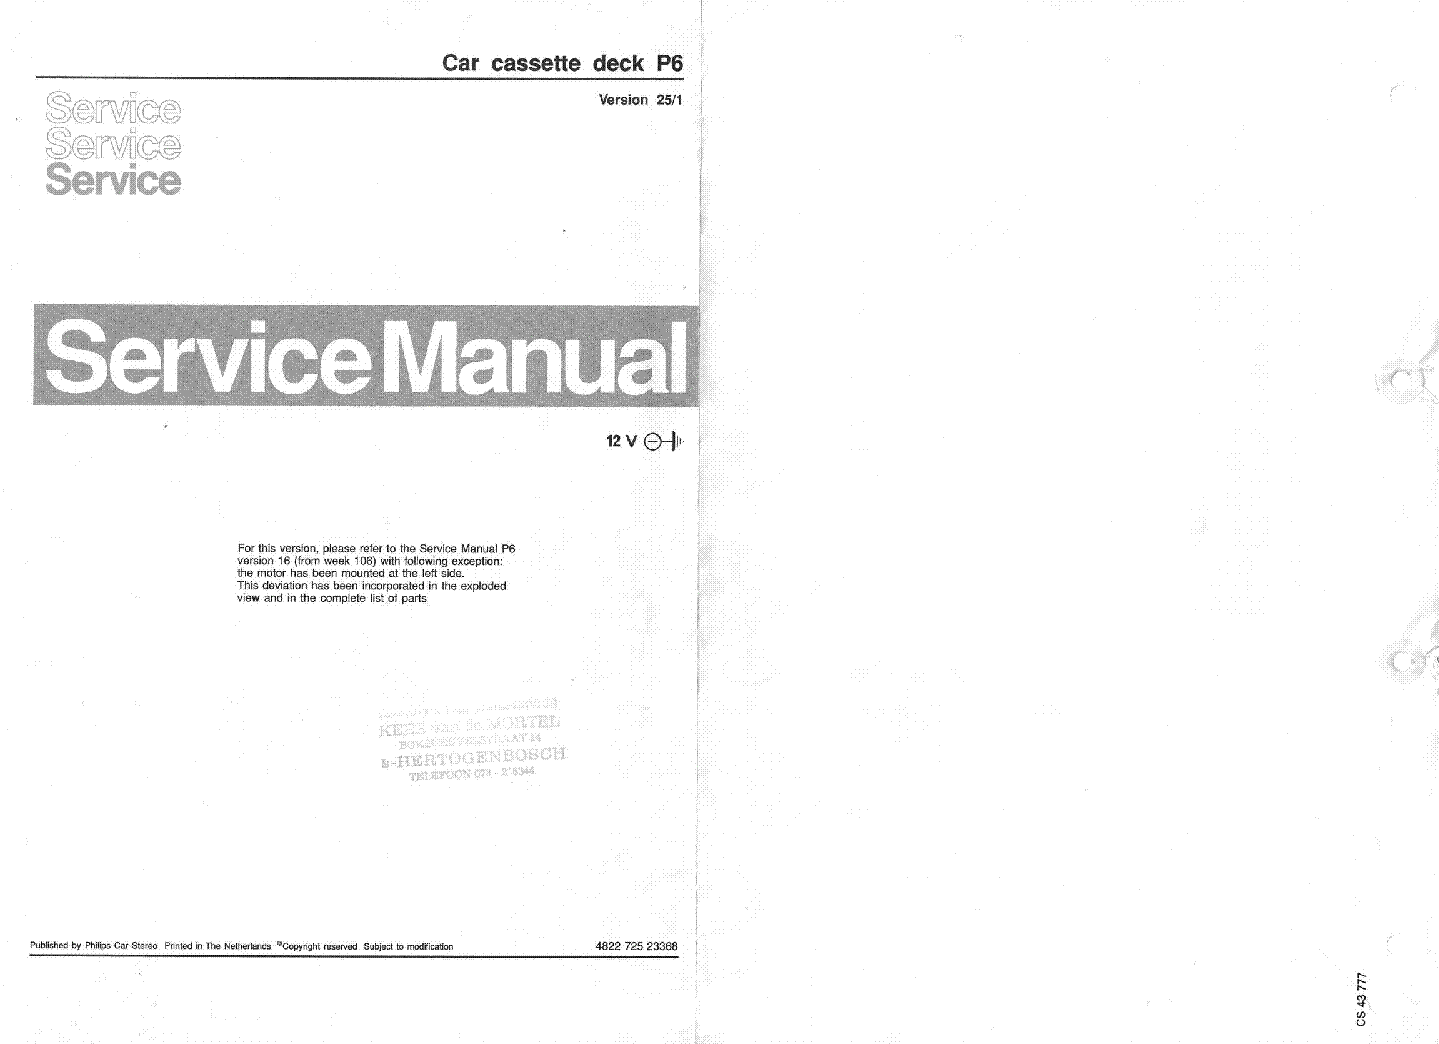 PHILIPS P6251 SM CARCASSETTEDECK Service Manual download, schematics